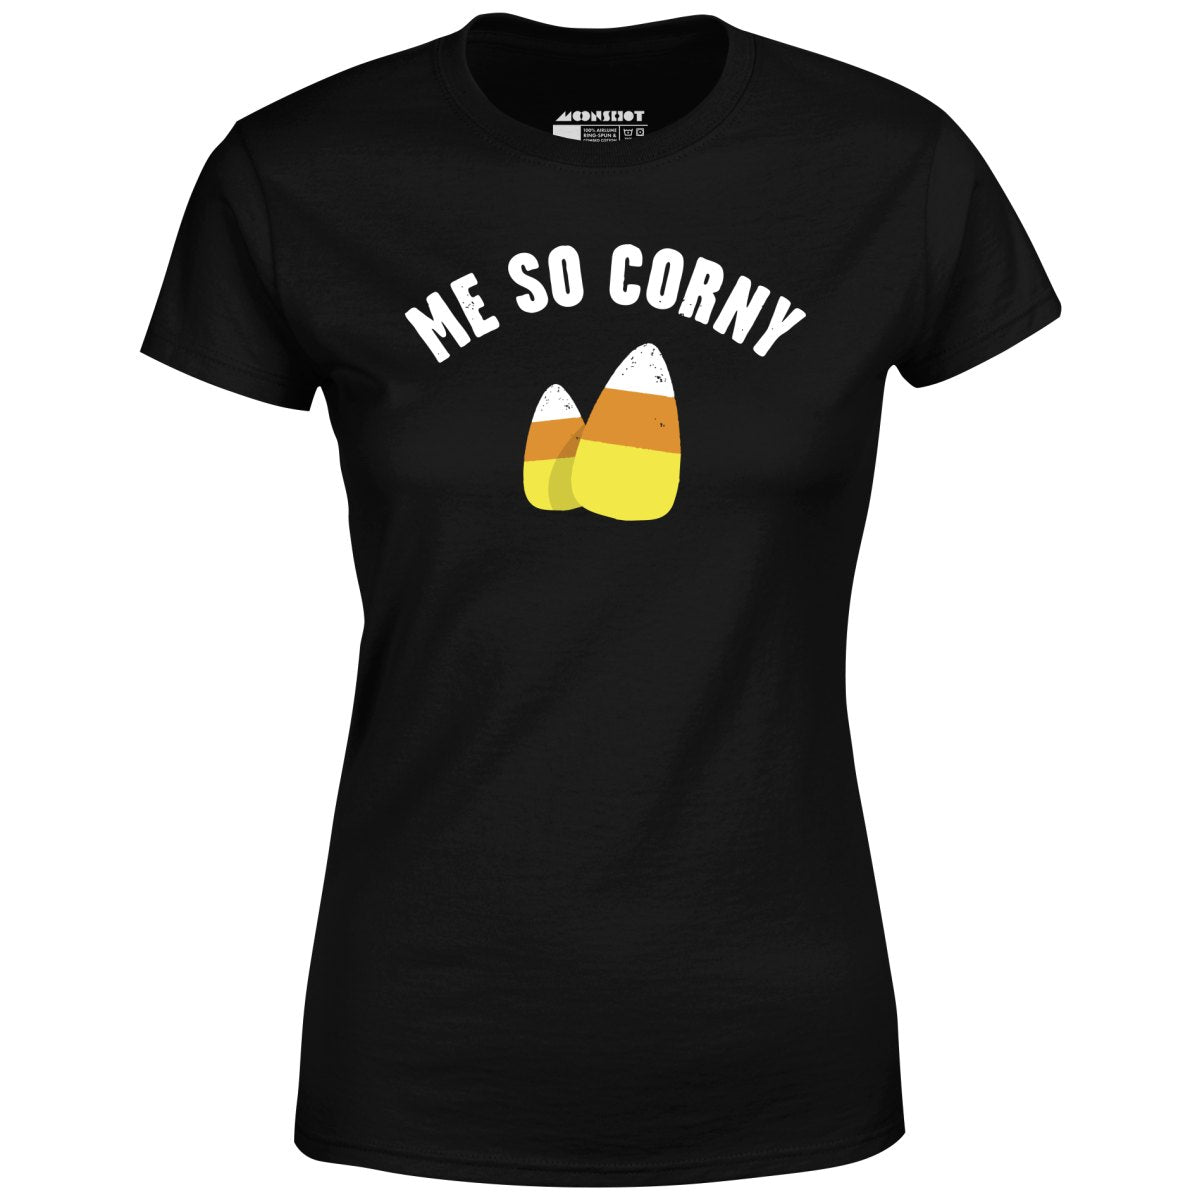 Me So Corny - Women's T-Shirt